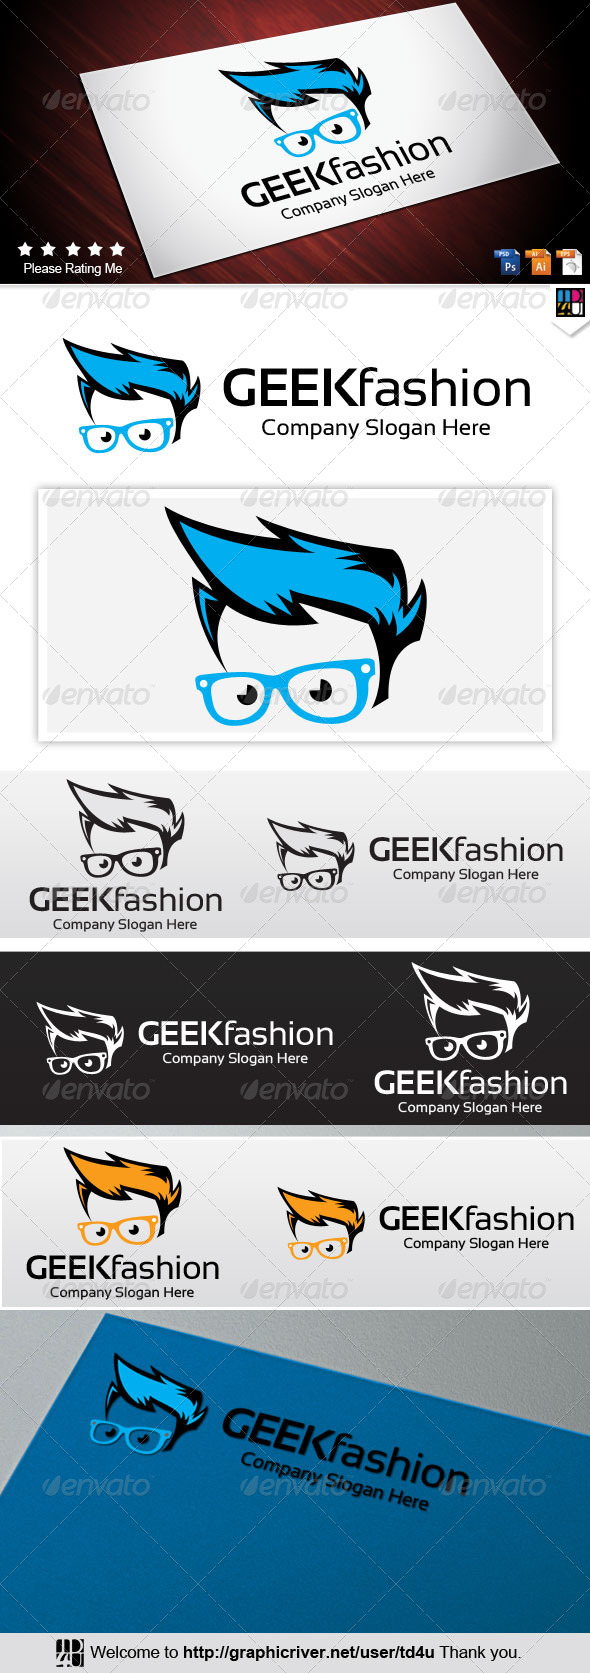 GraphicRiver Geek Fashion 7674804